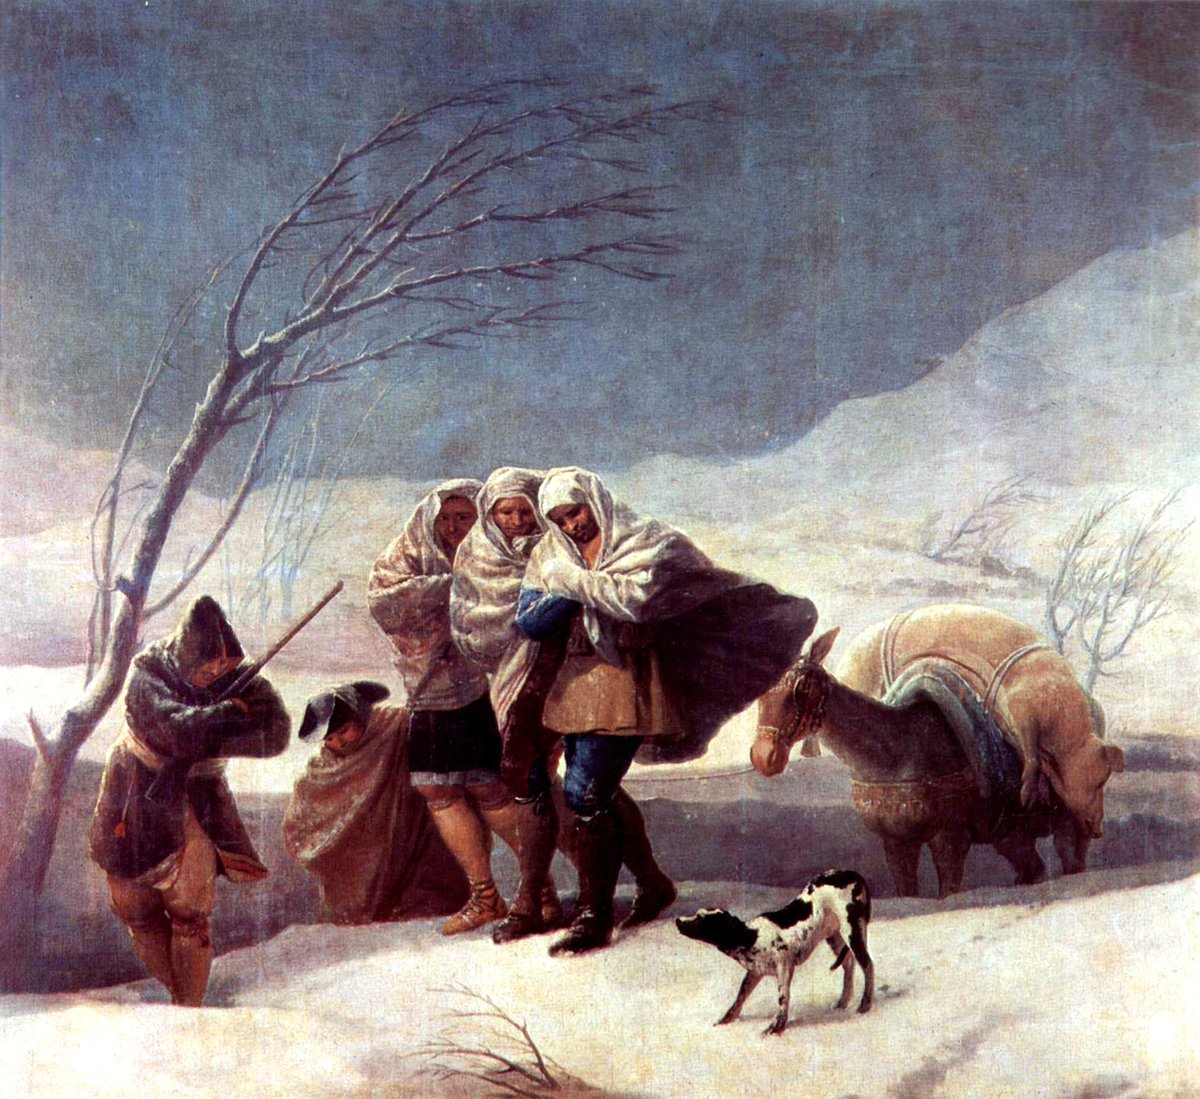 RT @artistgoya: The Snowstorm (Winter), 1787 https://t.co/OqNTnZCA1V #romanticism #goya https://t.co/BOfJbV7oqp